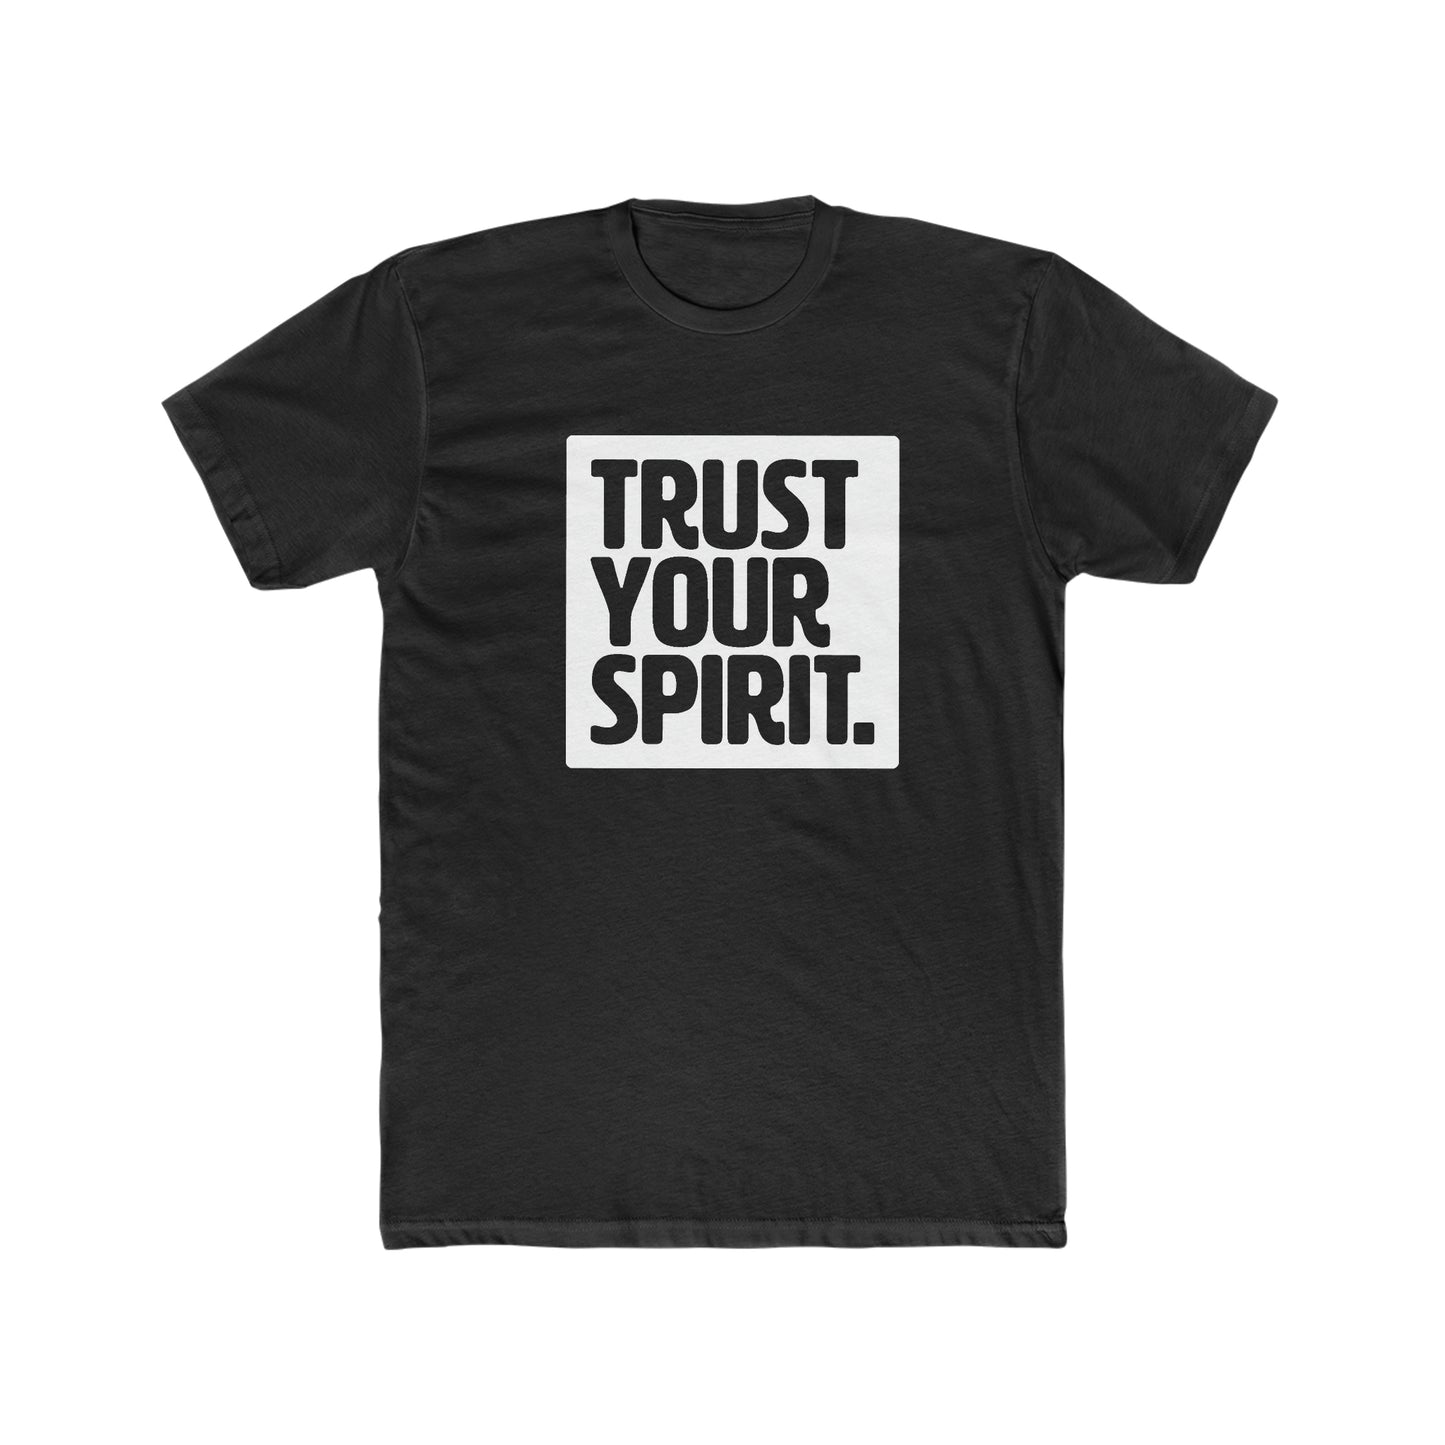 "Trust your spirit" tee